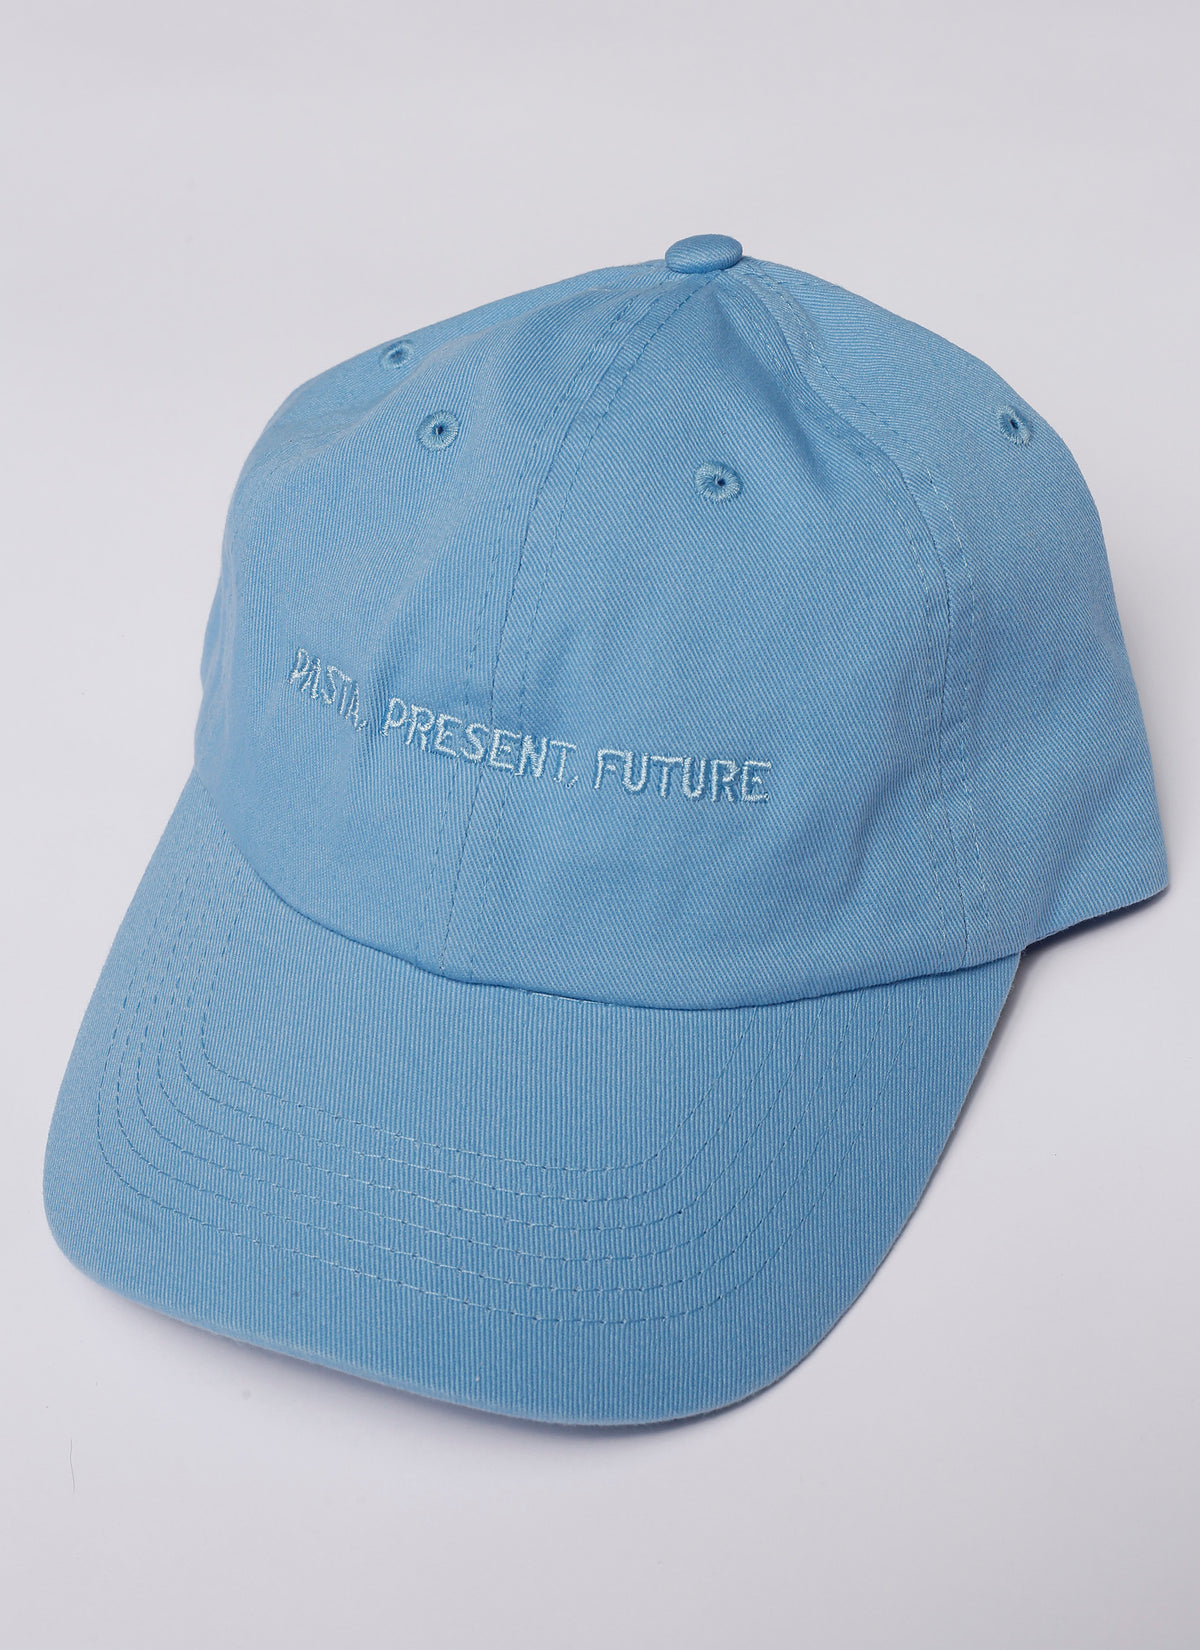 Pasta, Present, Future Hat by Ponytail Mafia